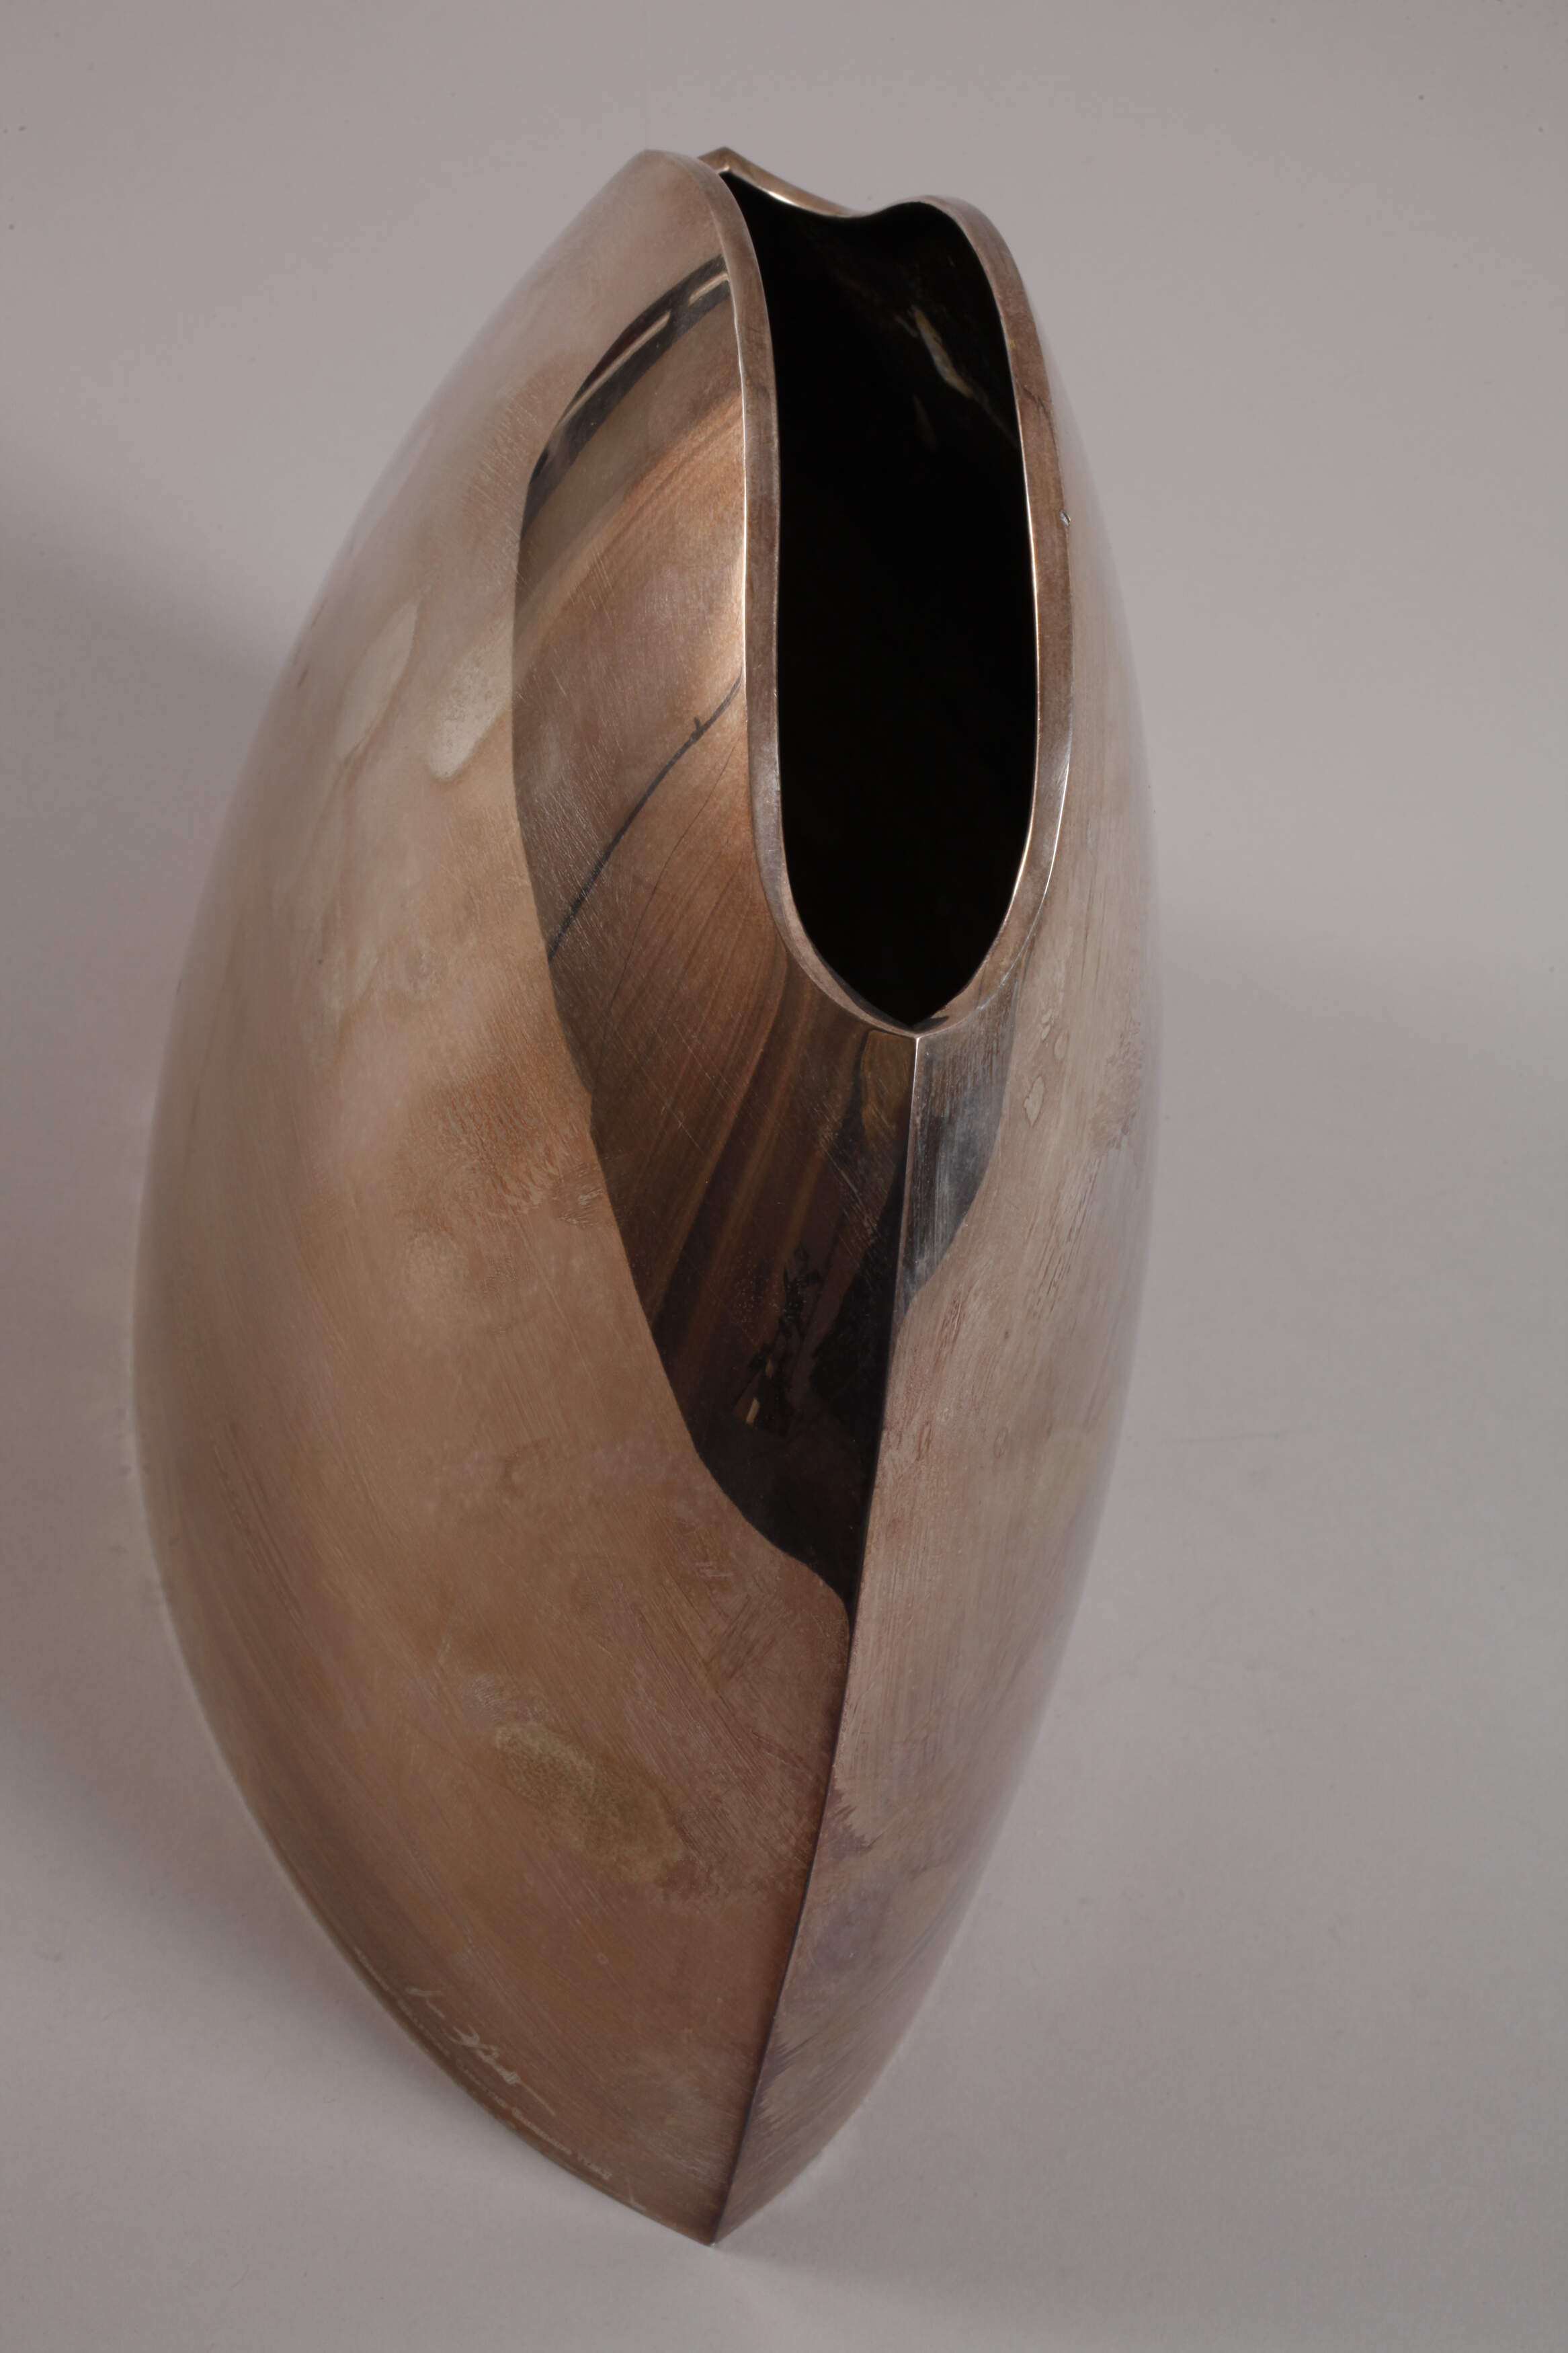 Lino Sabattini Vase "Mitrio" - Image 2 of 5